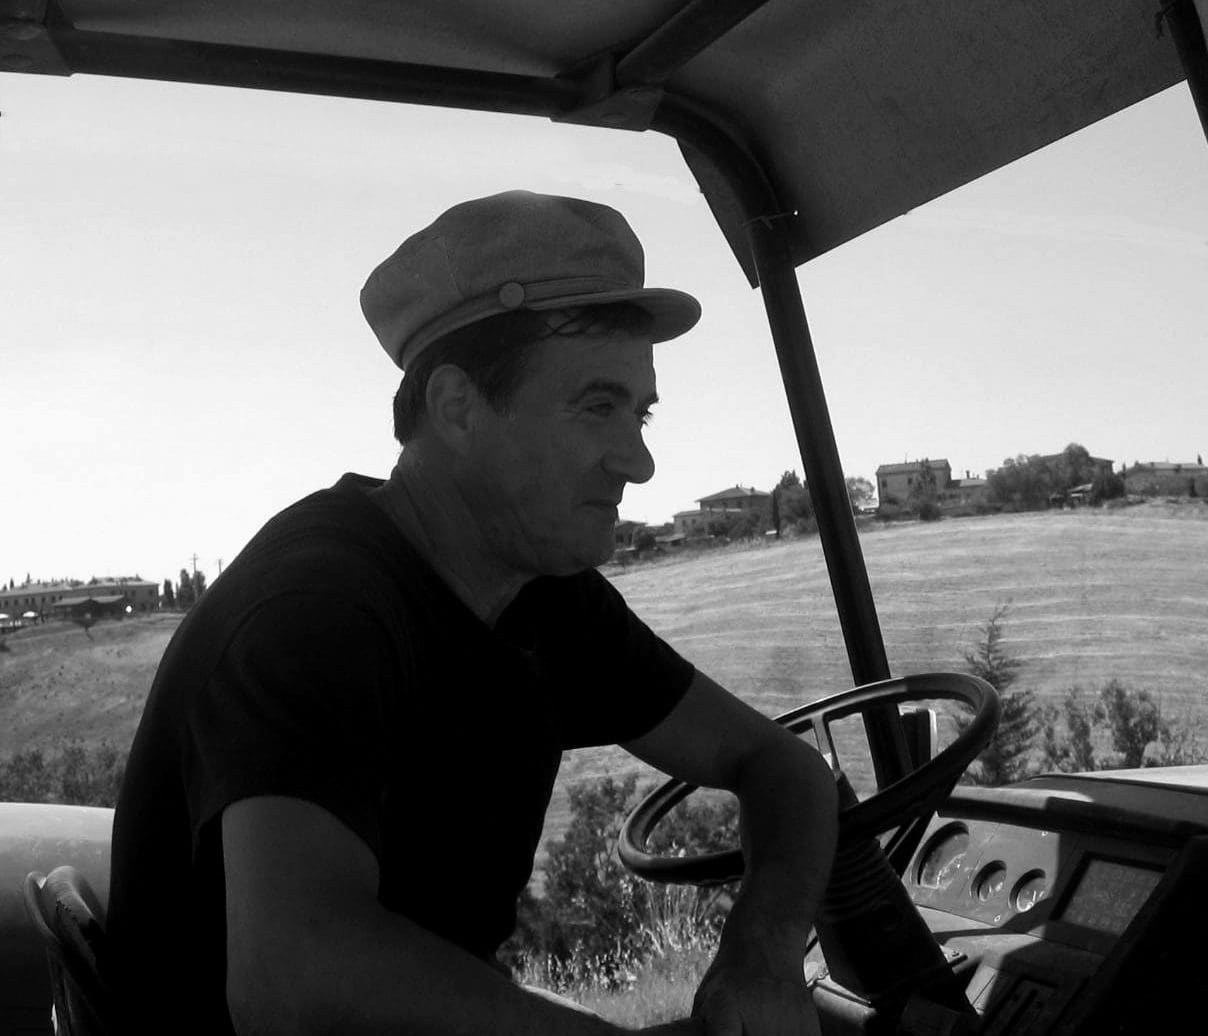 A man driving an old golf cart in the grass.